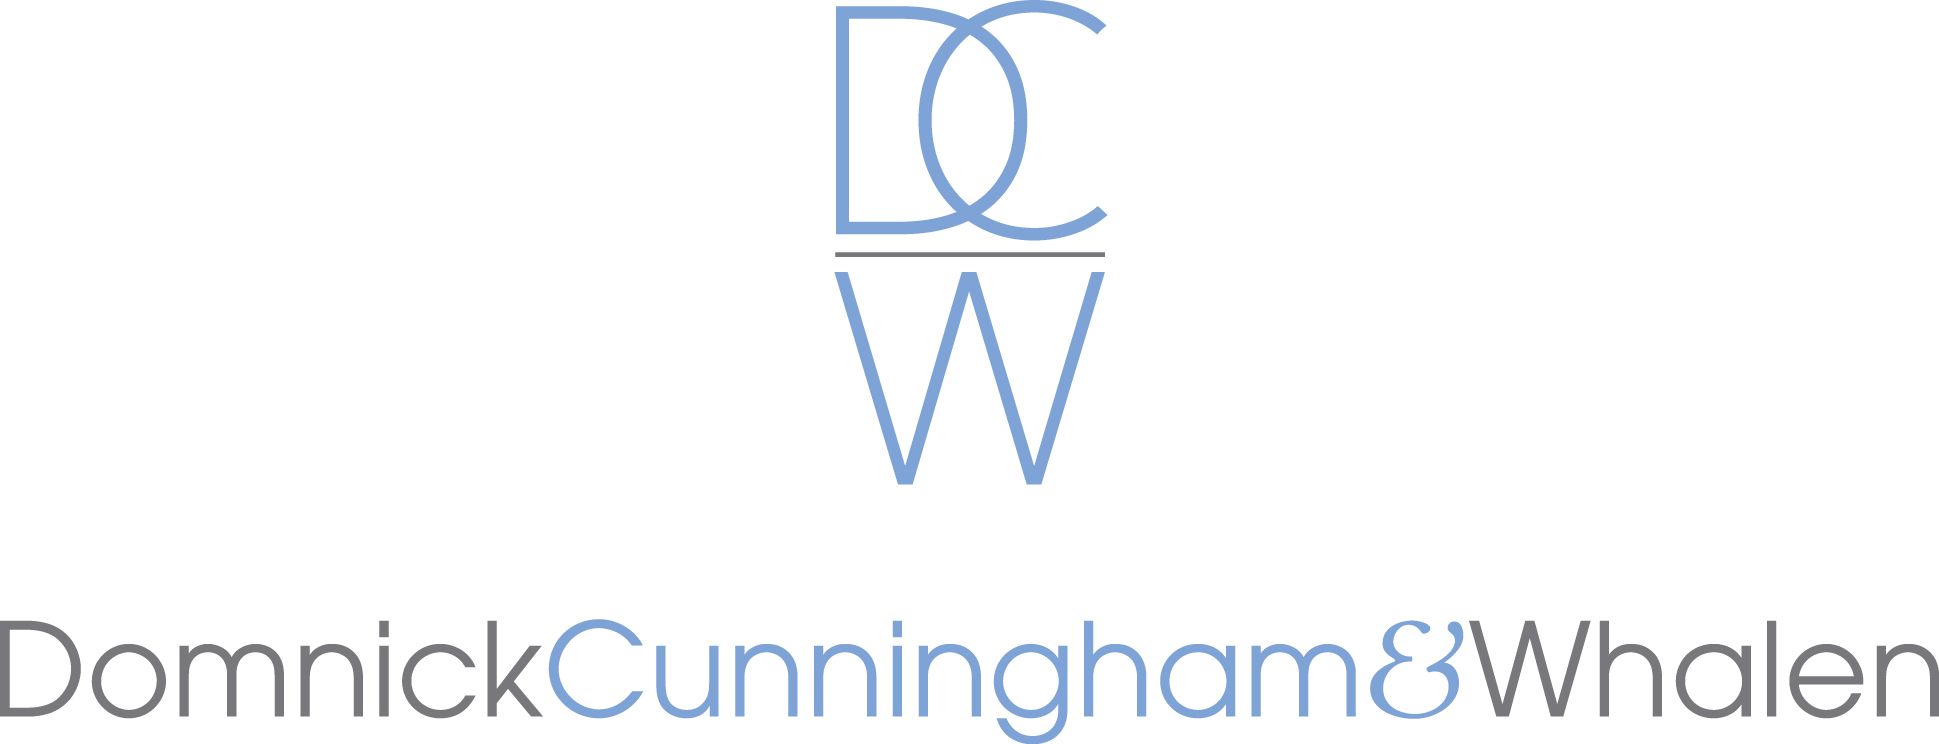 dcwlaw Logo